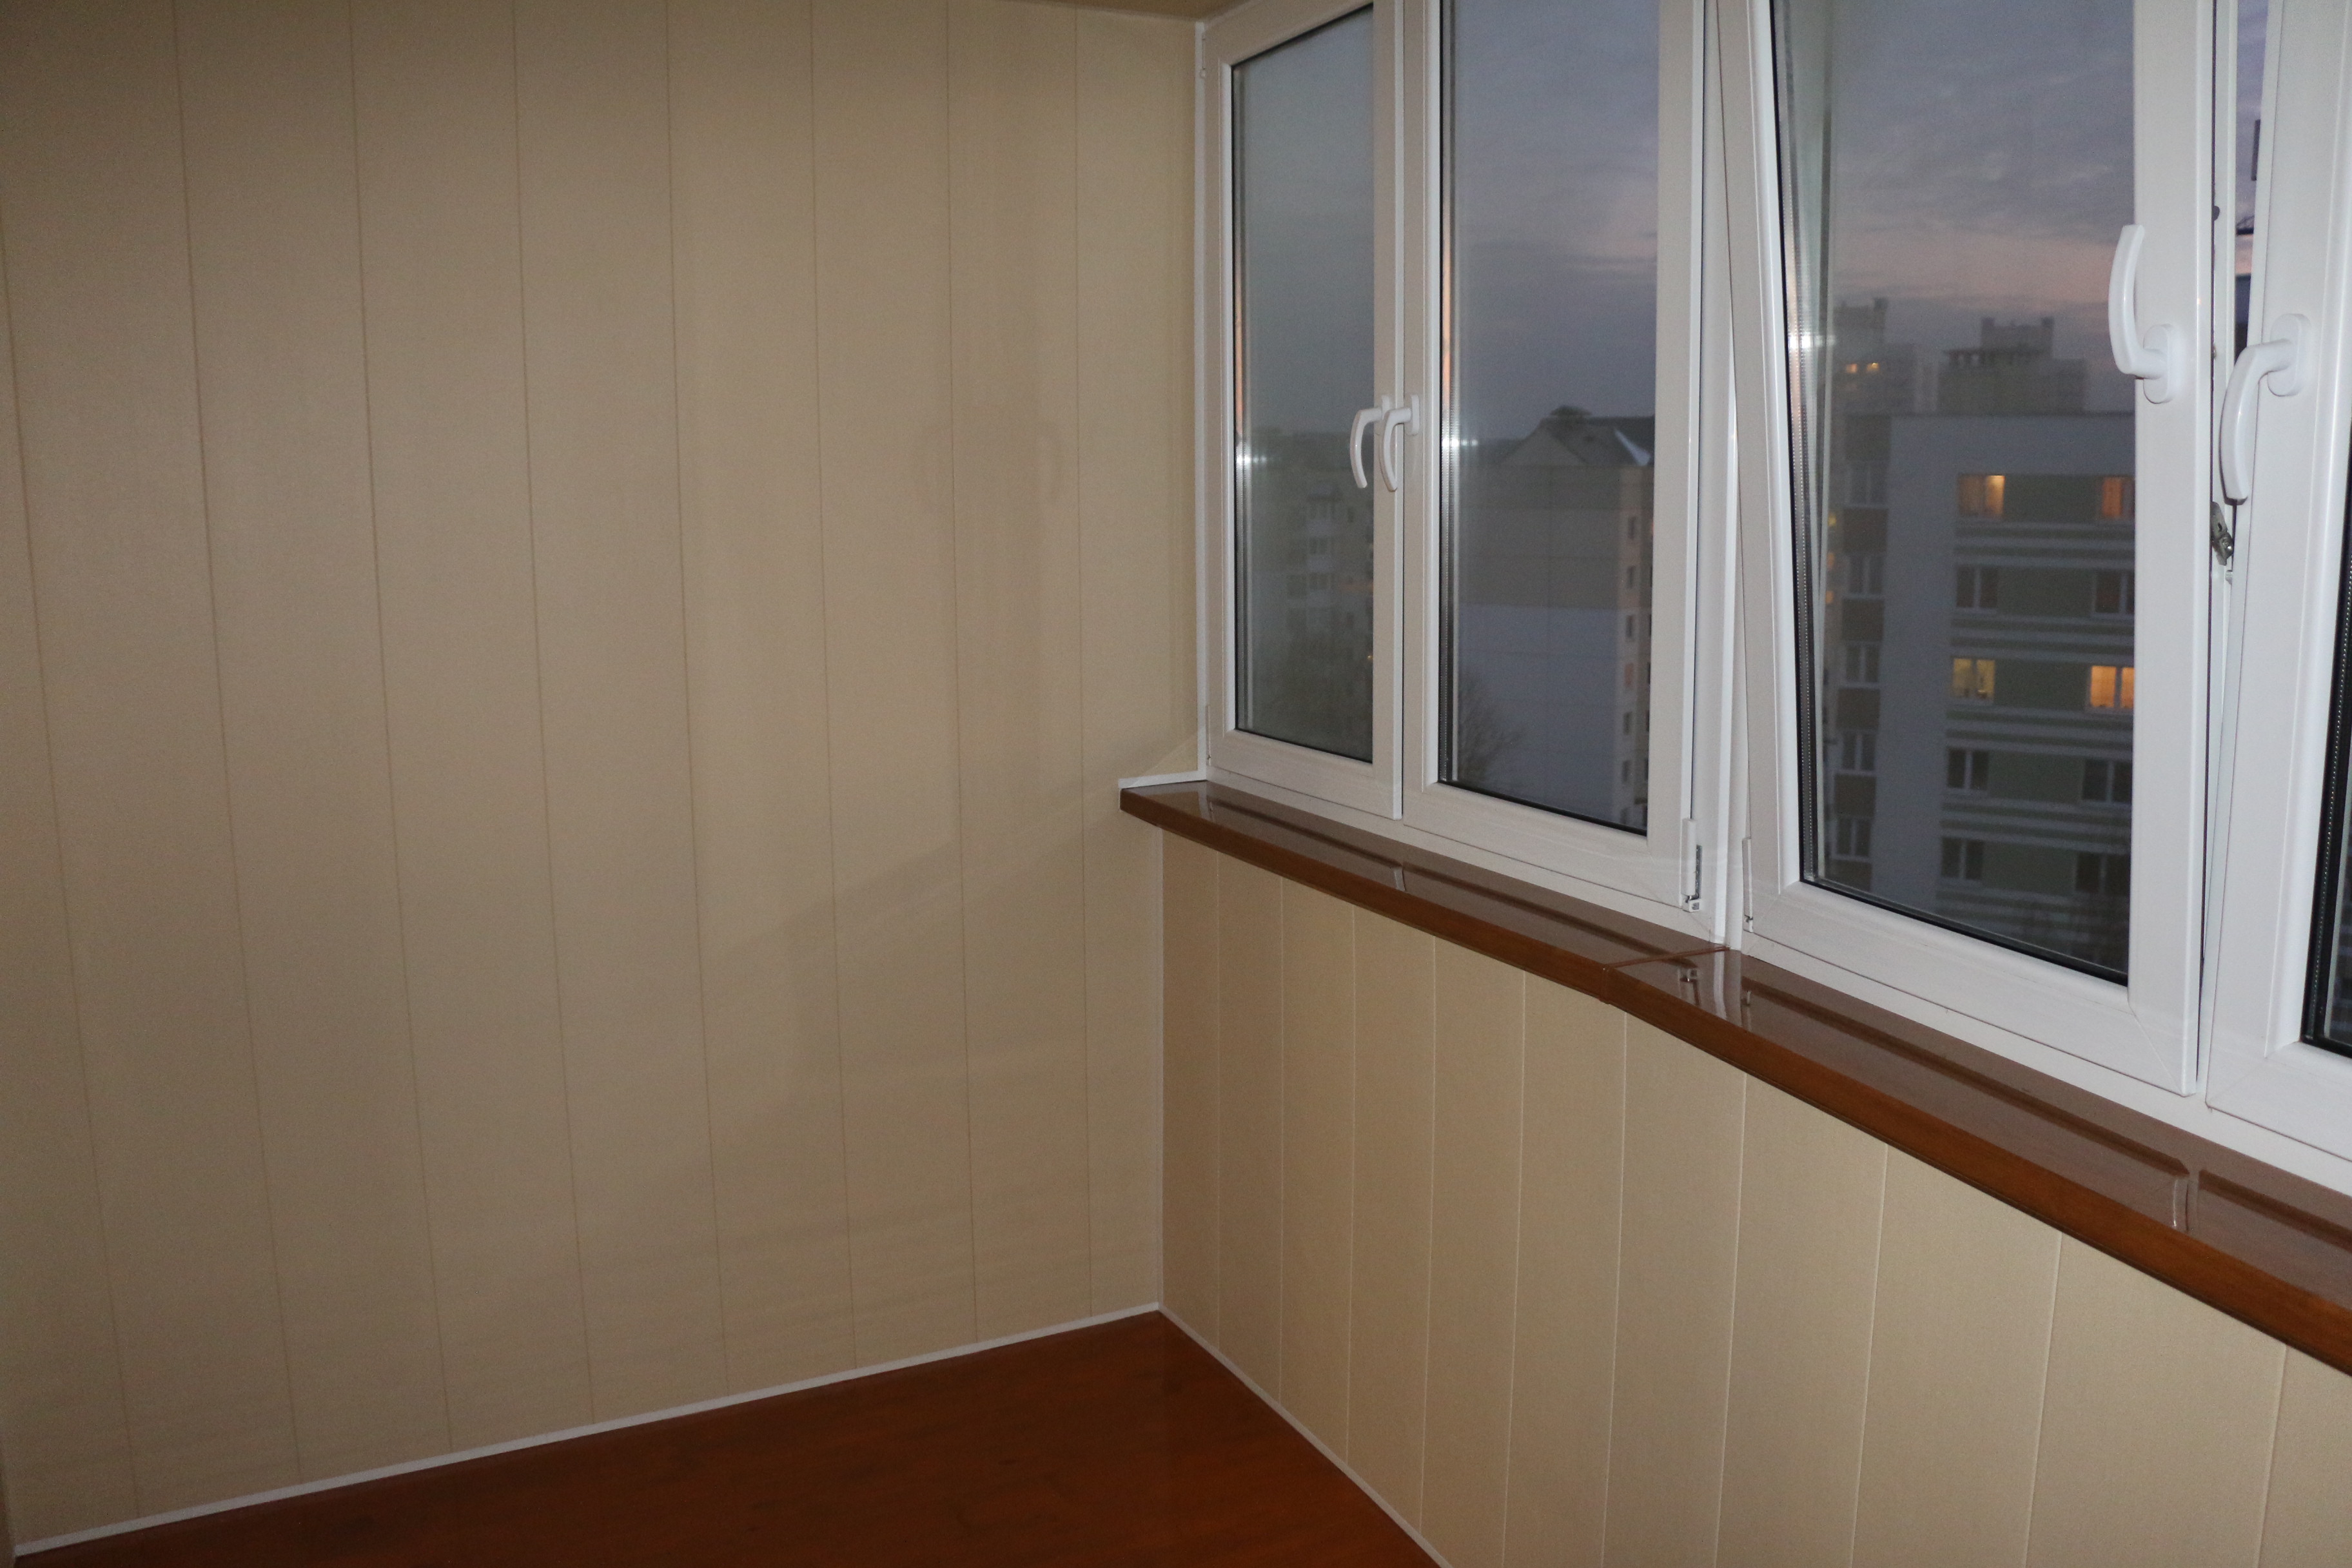 Обшивка балкона поливинилхлоридными панелями